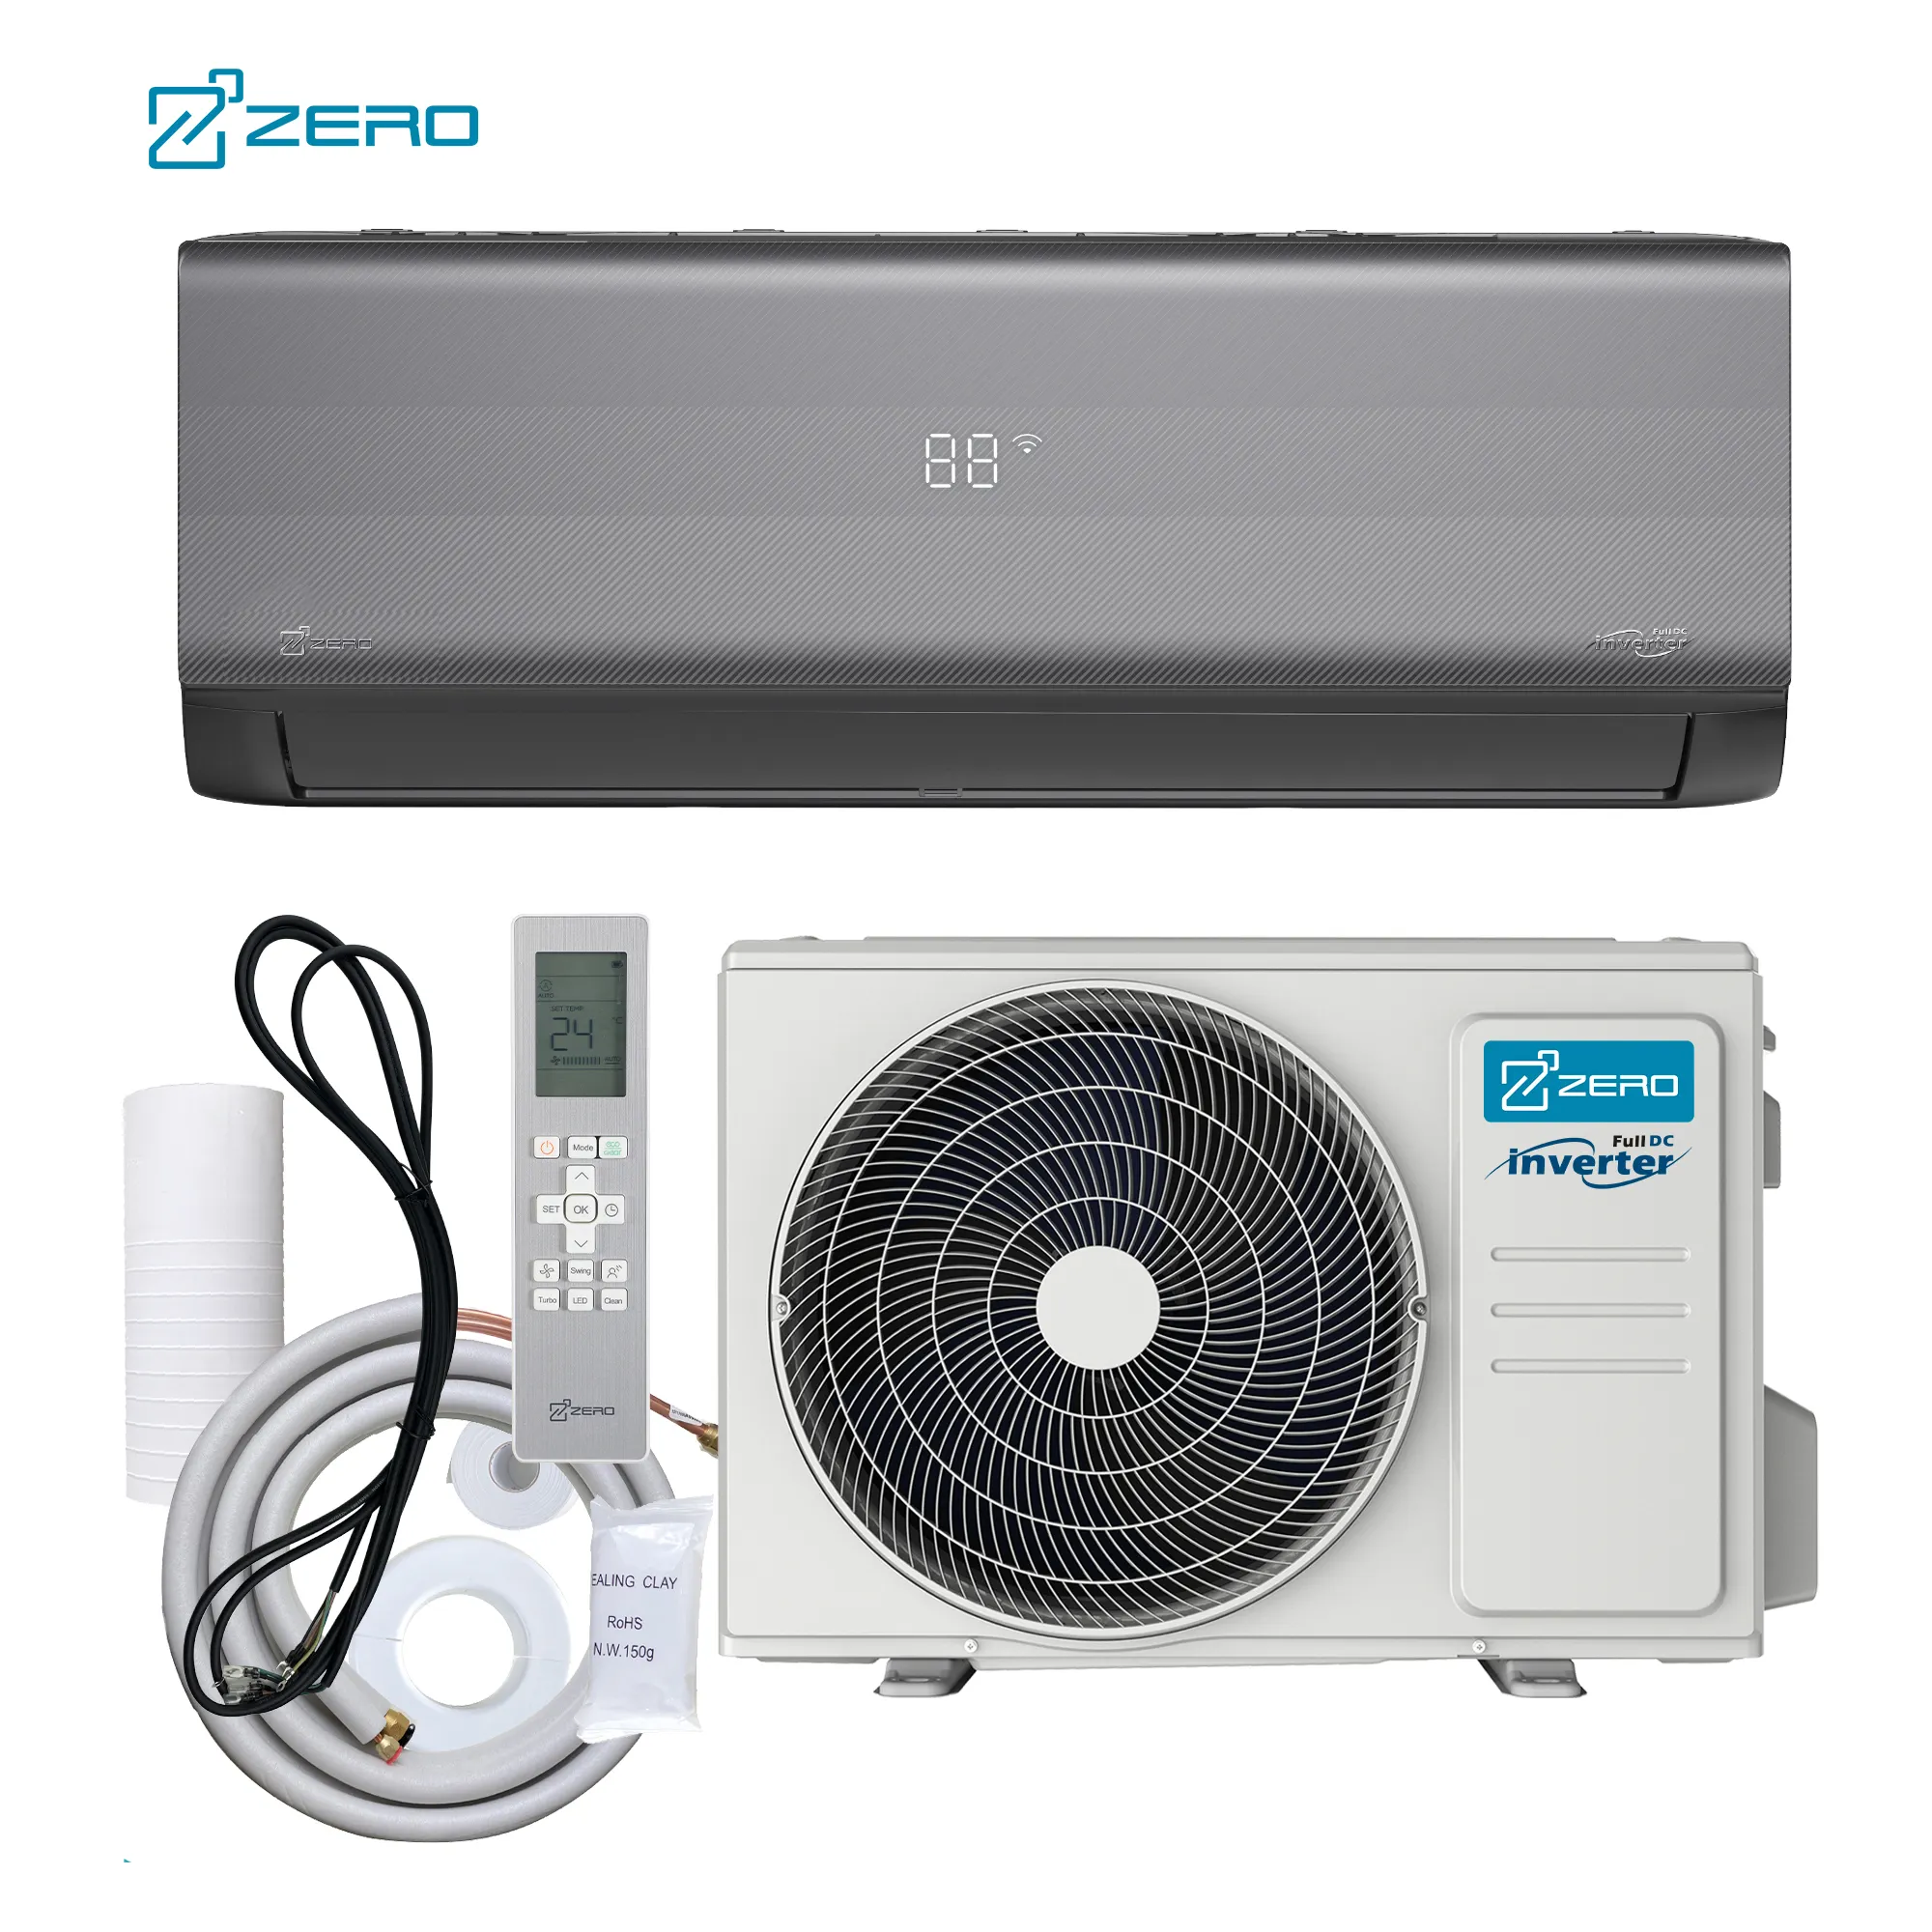 ZERO Z-pro 115v 230v 18000btu 36000 Btu inverter mini split air conditioners smart high efficient air conditioner